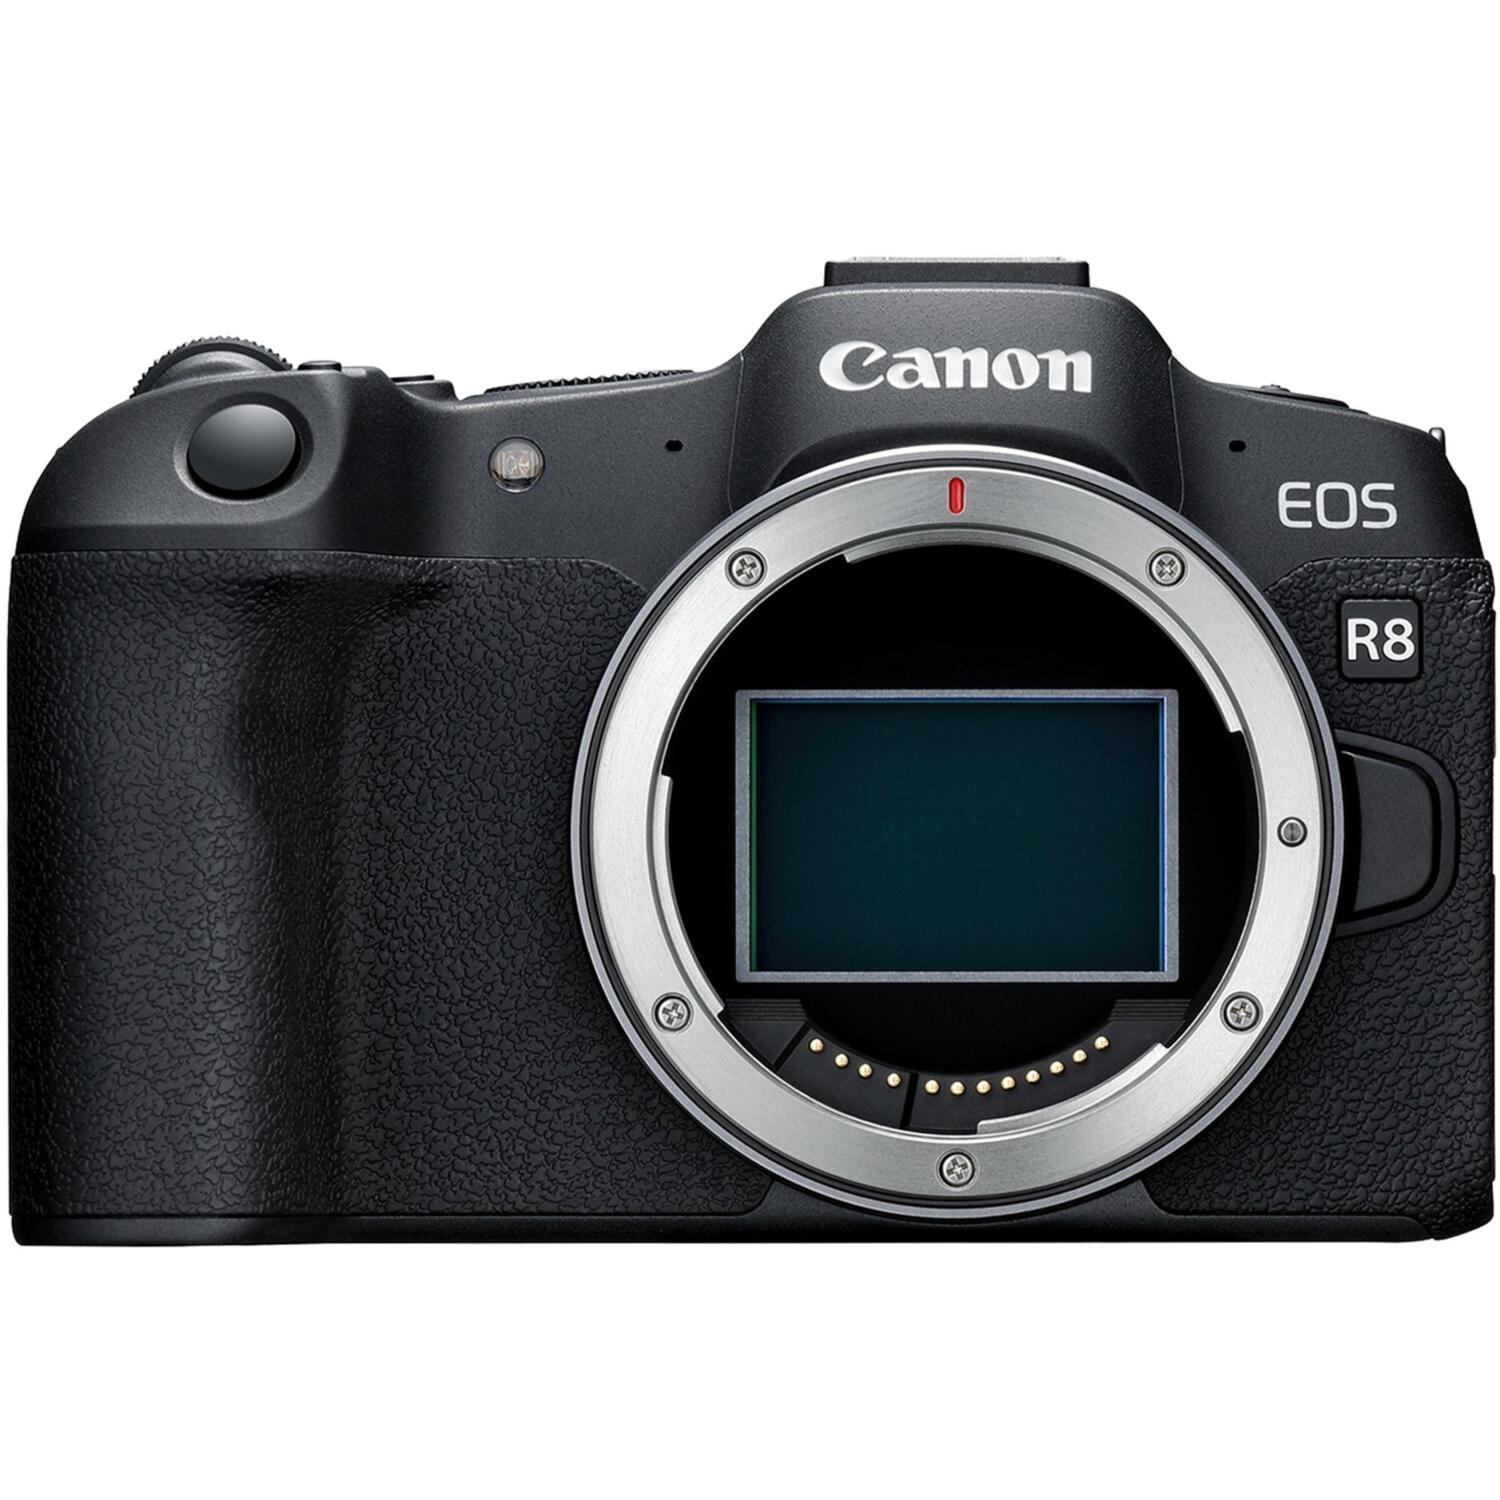 Фотоаппарат Canon EOS R8 Body, беззеркальный, черный, 24,2 Mpx, CMOS 22.3х14.8 мм, UHD 4K, экран 3.0